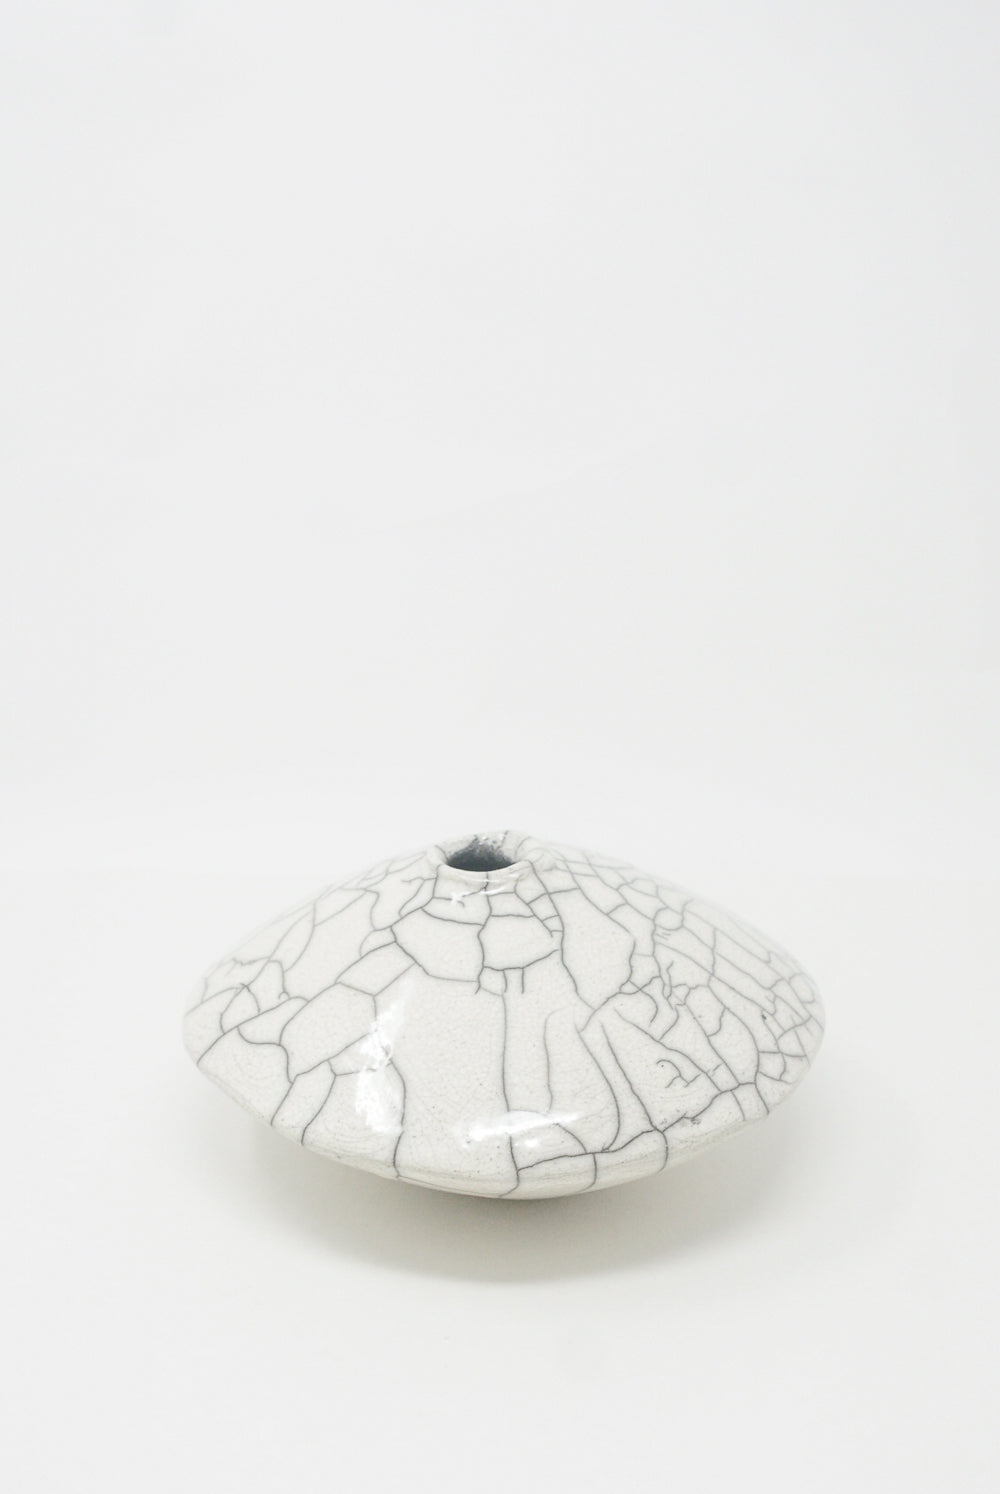 A white, crackle-glazed Ikebana Vase in Raku-Fired Stoneware dish from MONDAYS on a plain background.